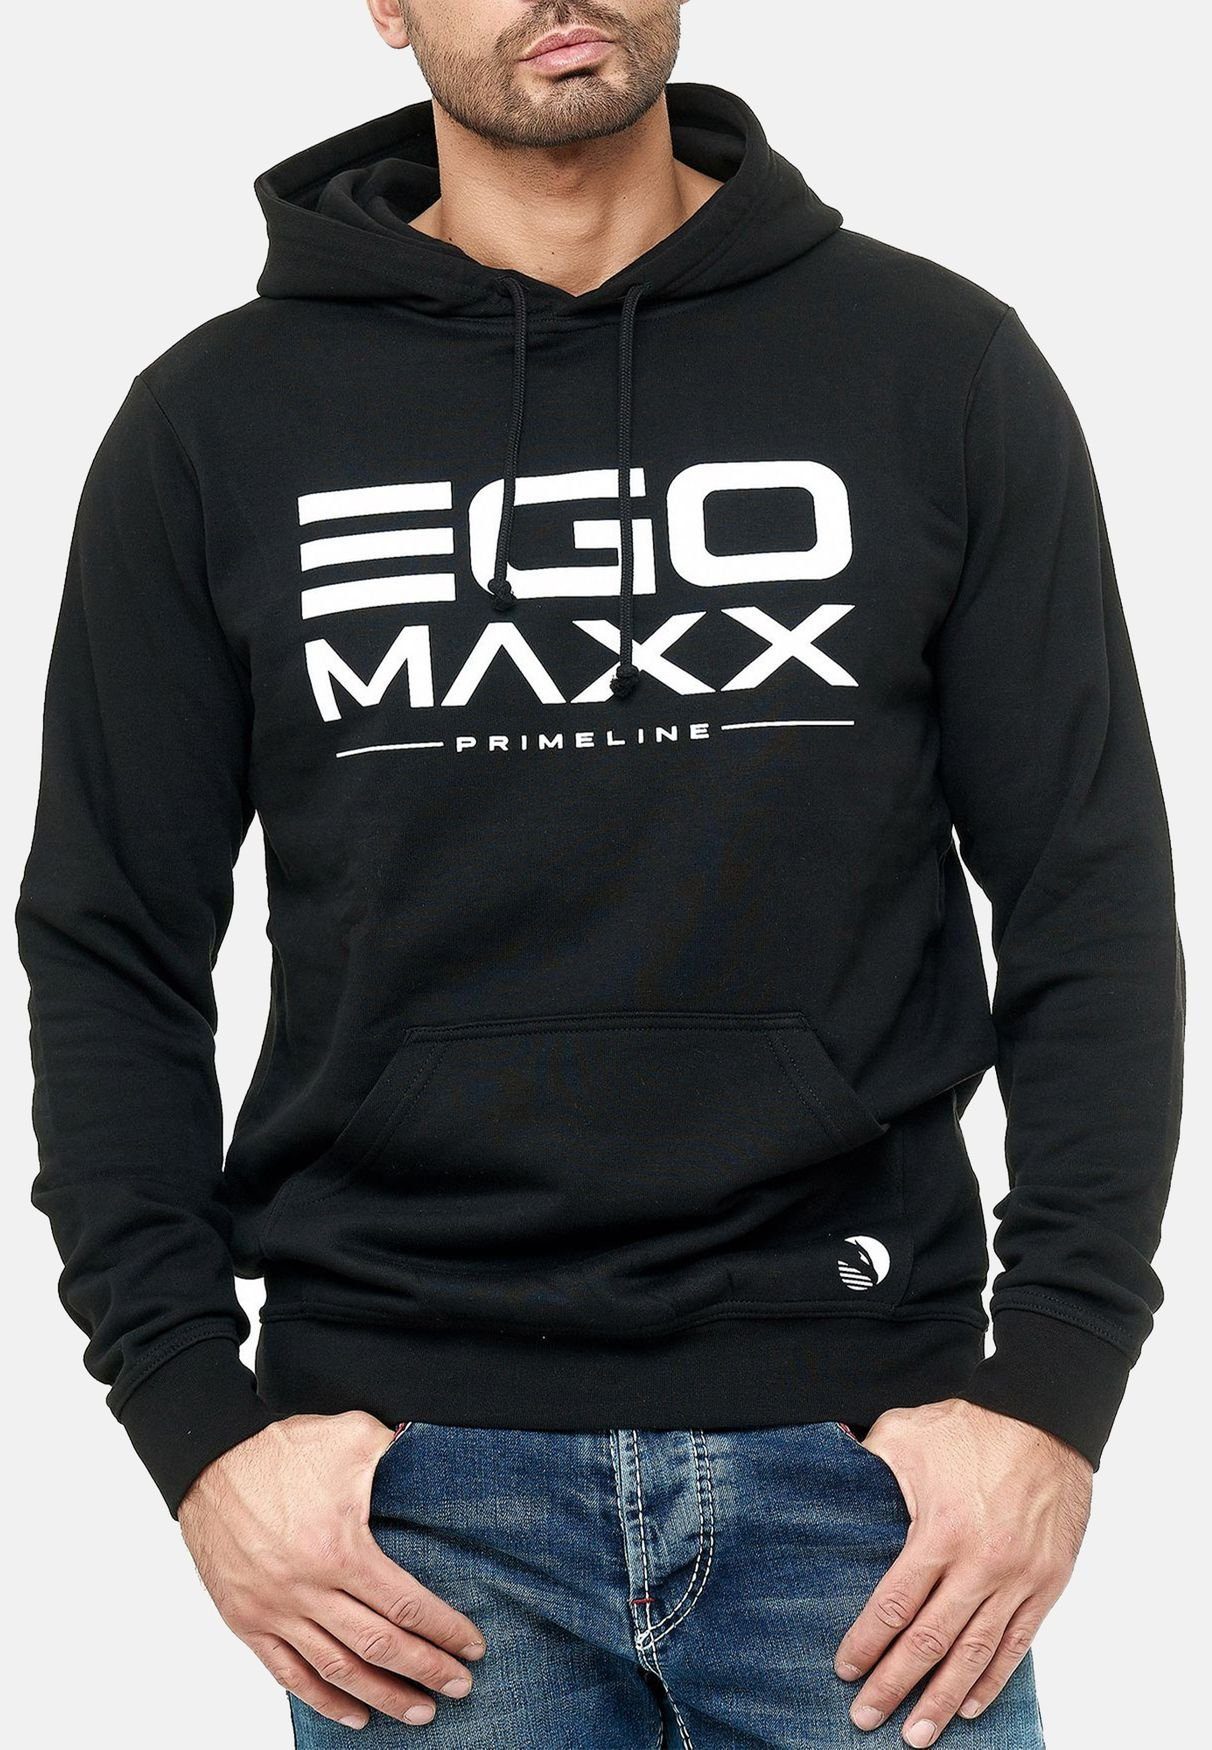 Egomaxx Hoodie Kapuzenpullover Sweater EGO in Sweatjacke Schwarz Design Hoodie 3042 (1-tlg)